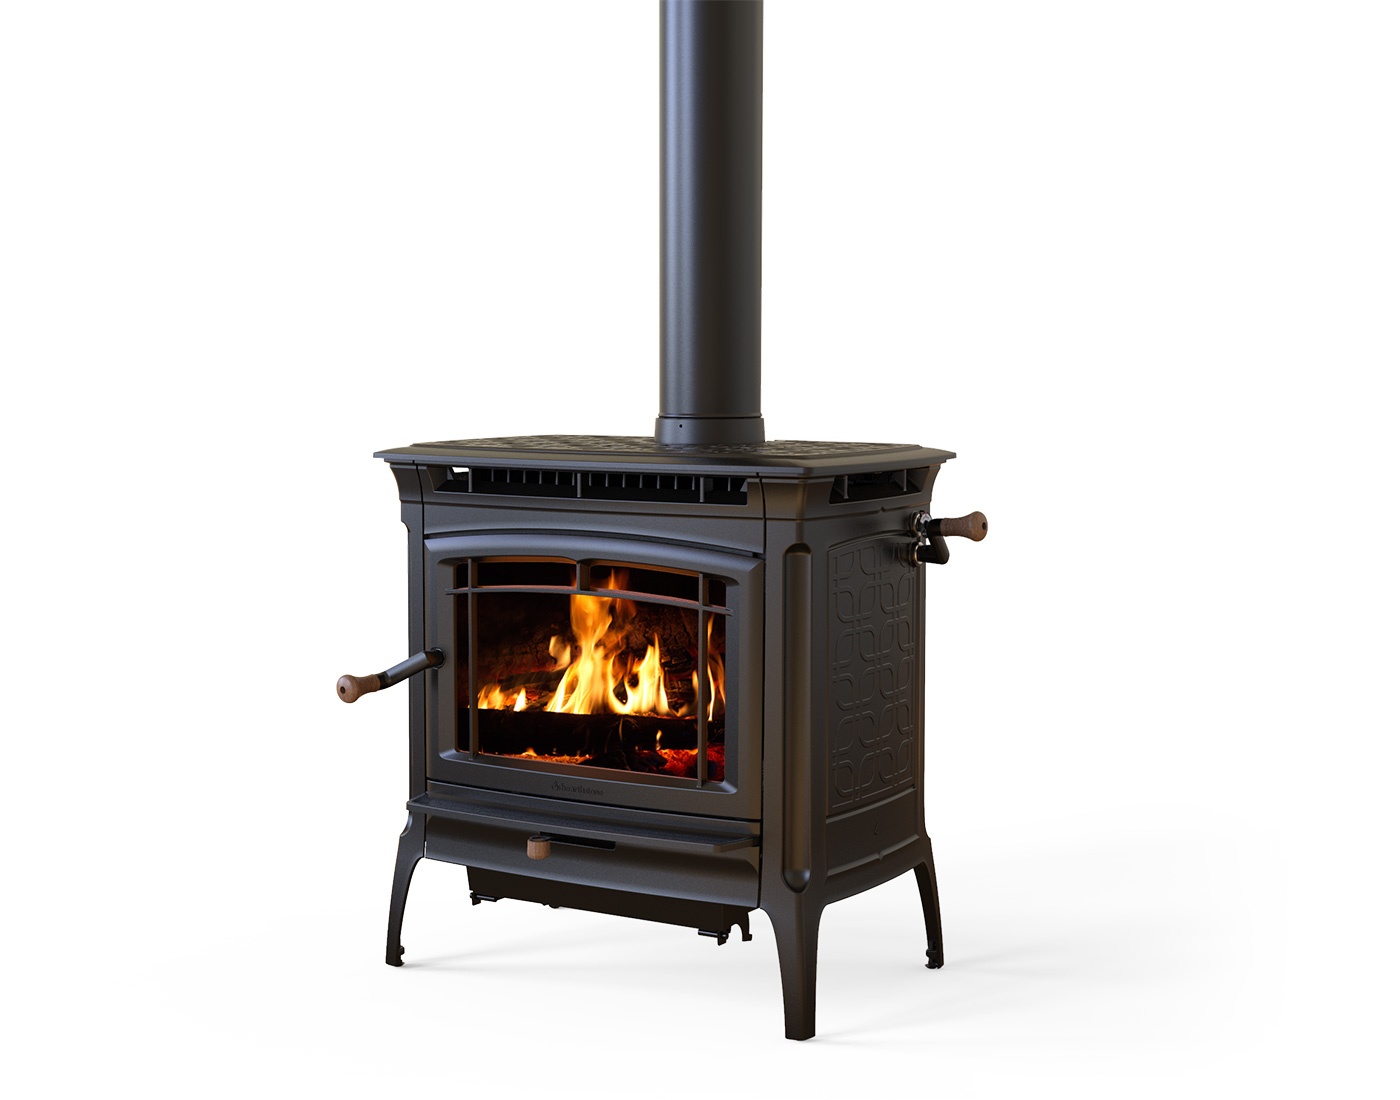 Hearthstone Manchester Cast Iron stove in matte black